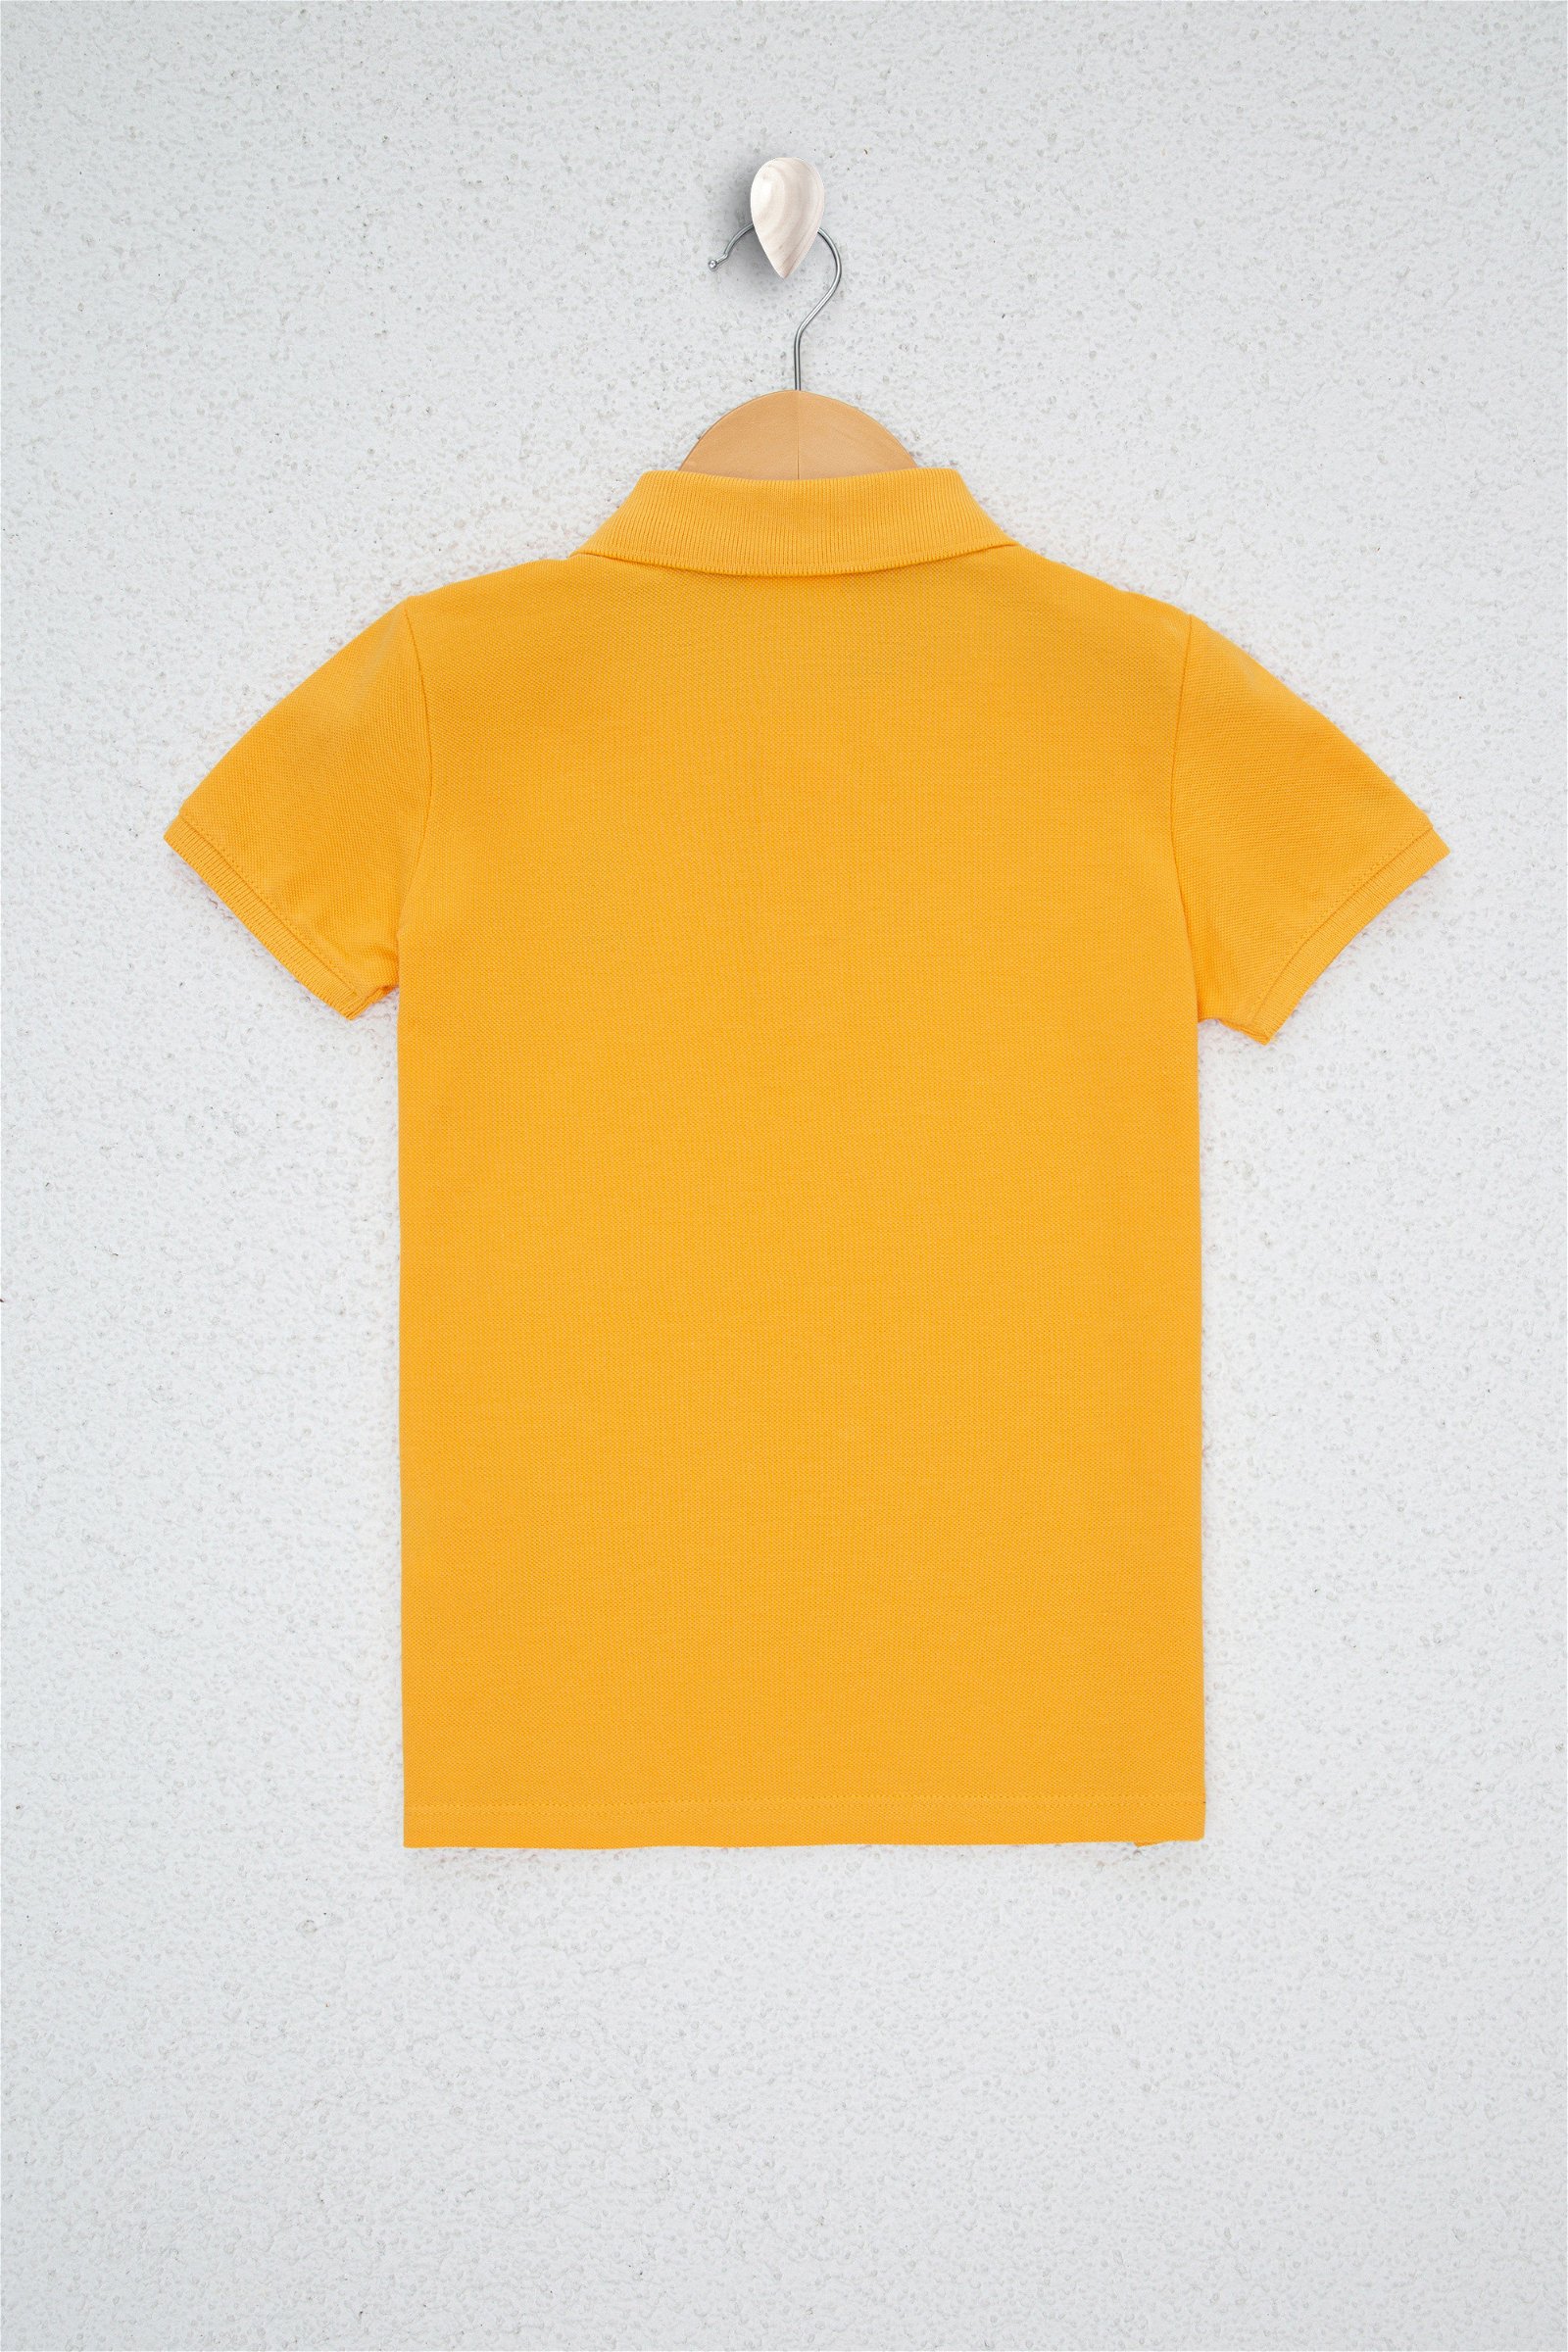 تی شرت یقه پولو زرد  استاندارد فیت آستین کوتاه پسرانه یو اس پولو | US POLO ASSN